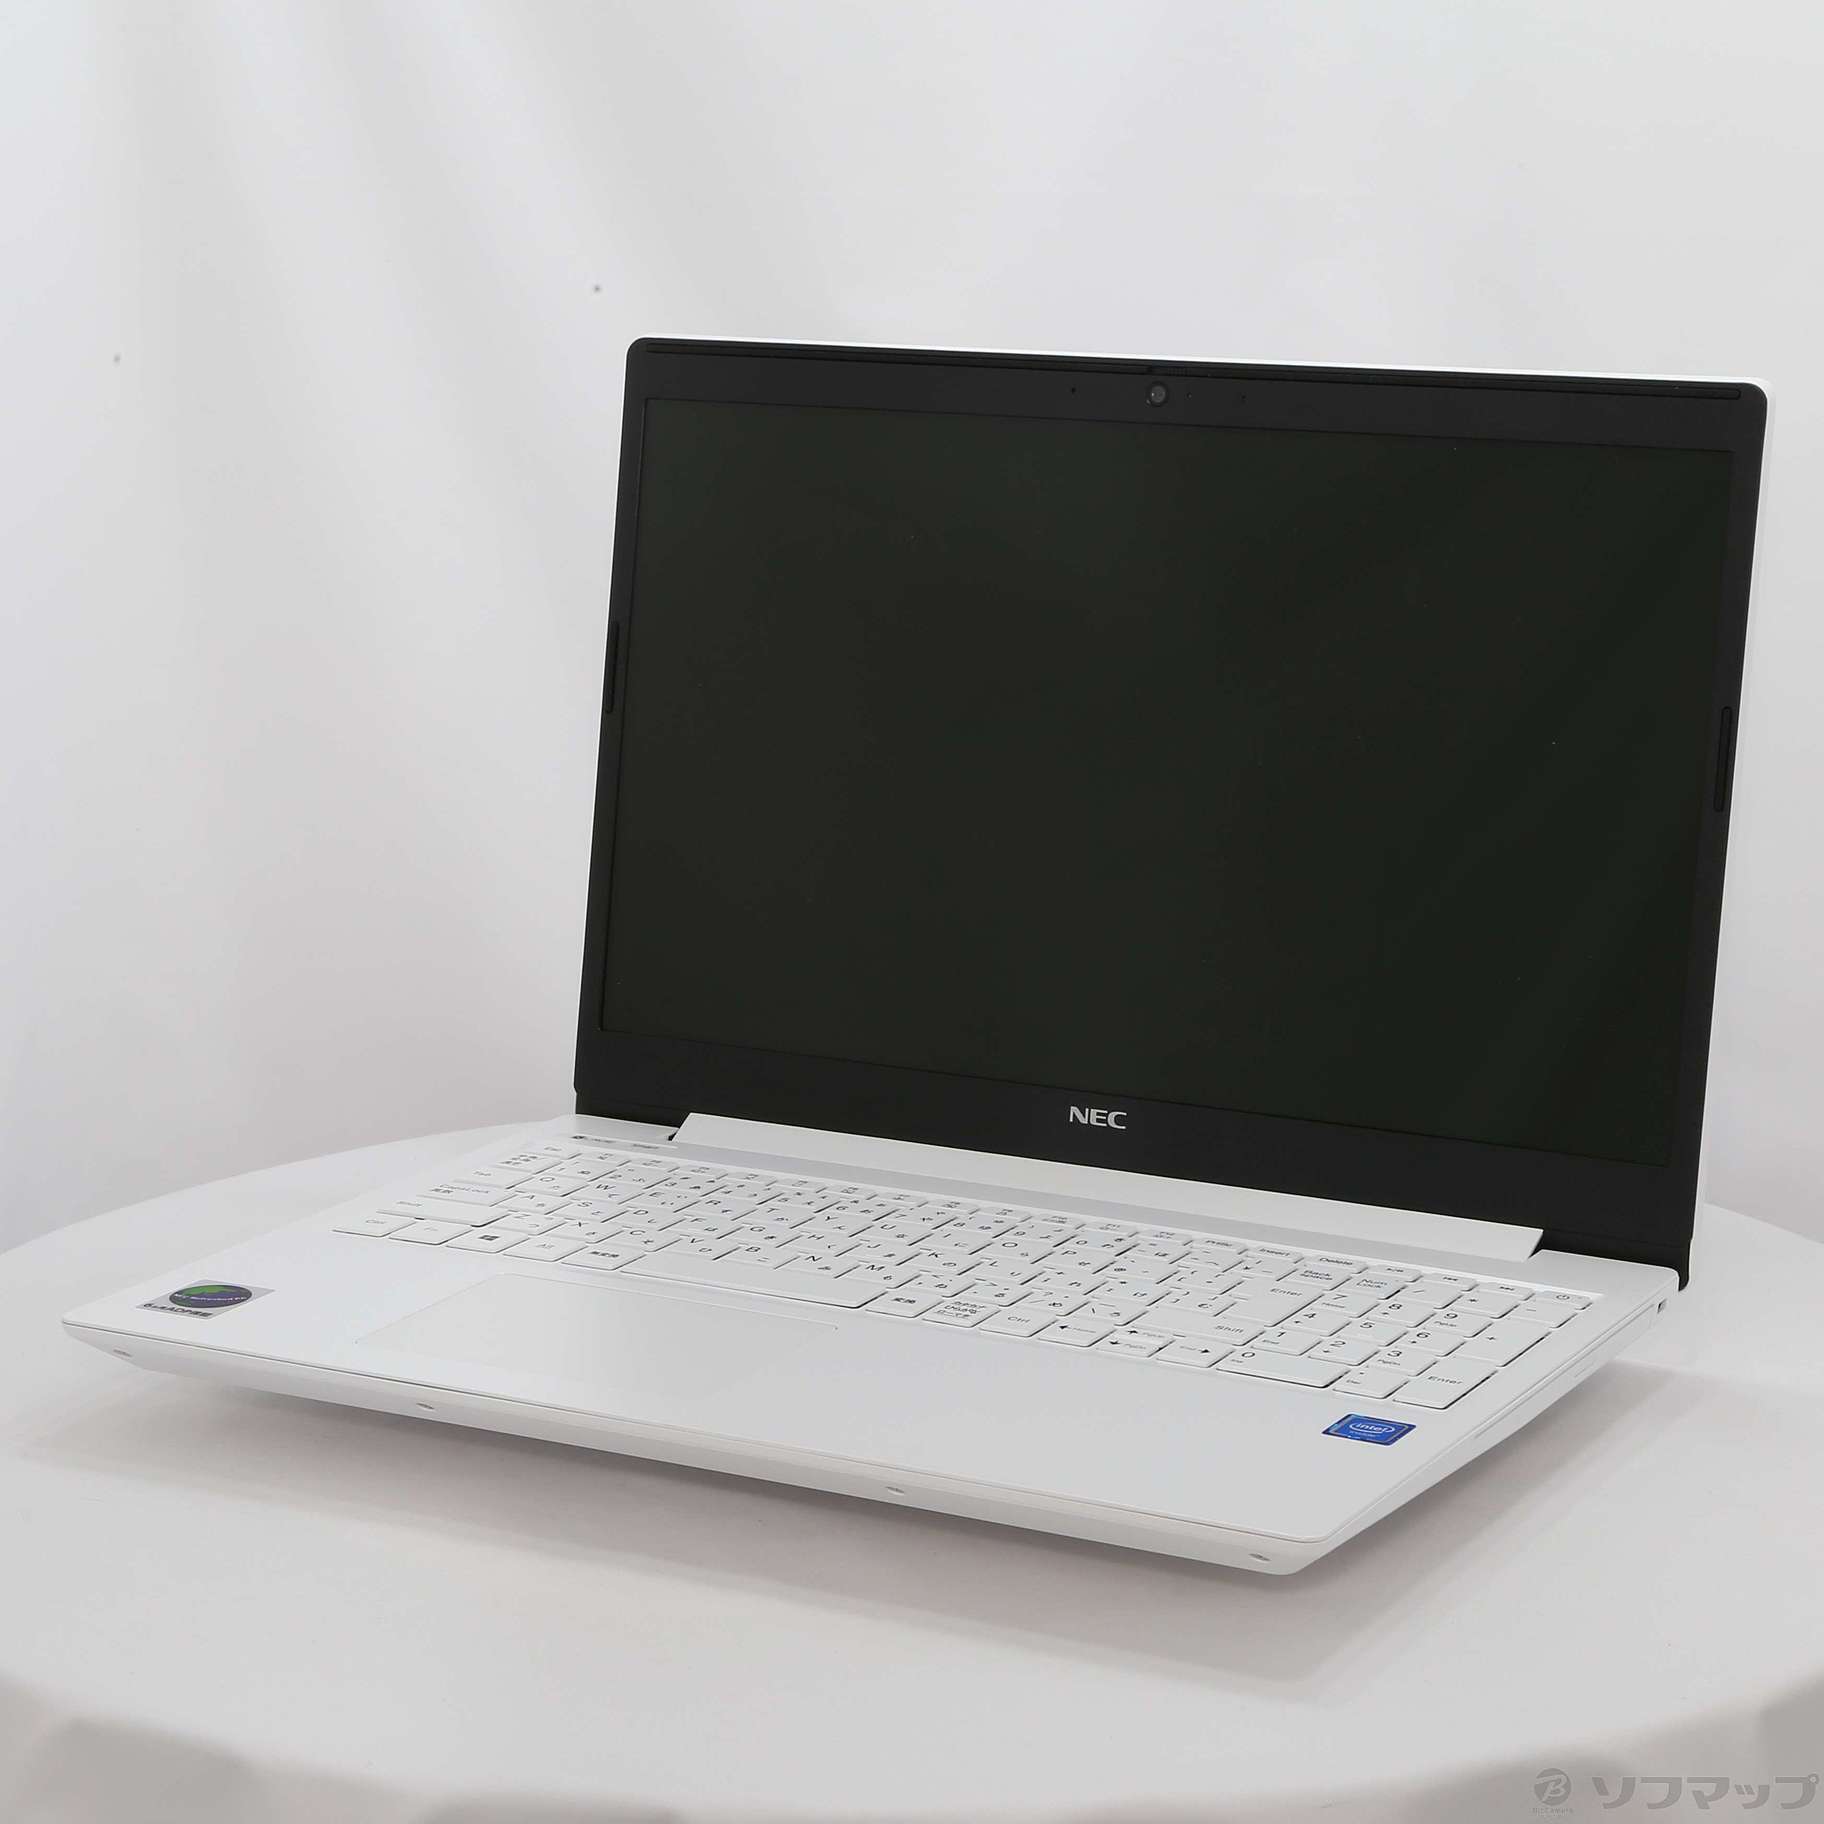 LAVIE Smart NS PC-SN18CJTDF-D カームホワイト 〔NEC Refreshed PC〕 〔Windows 10〕  ≪メーカー保証あり≫